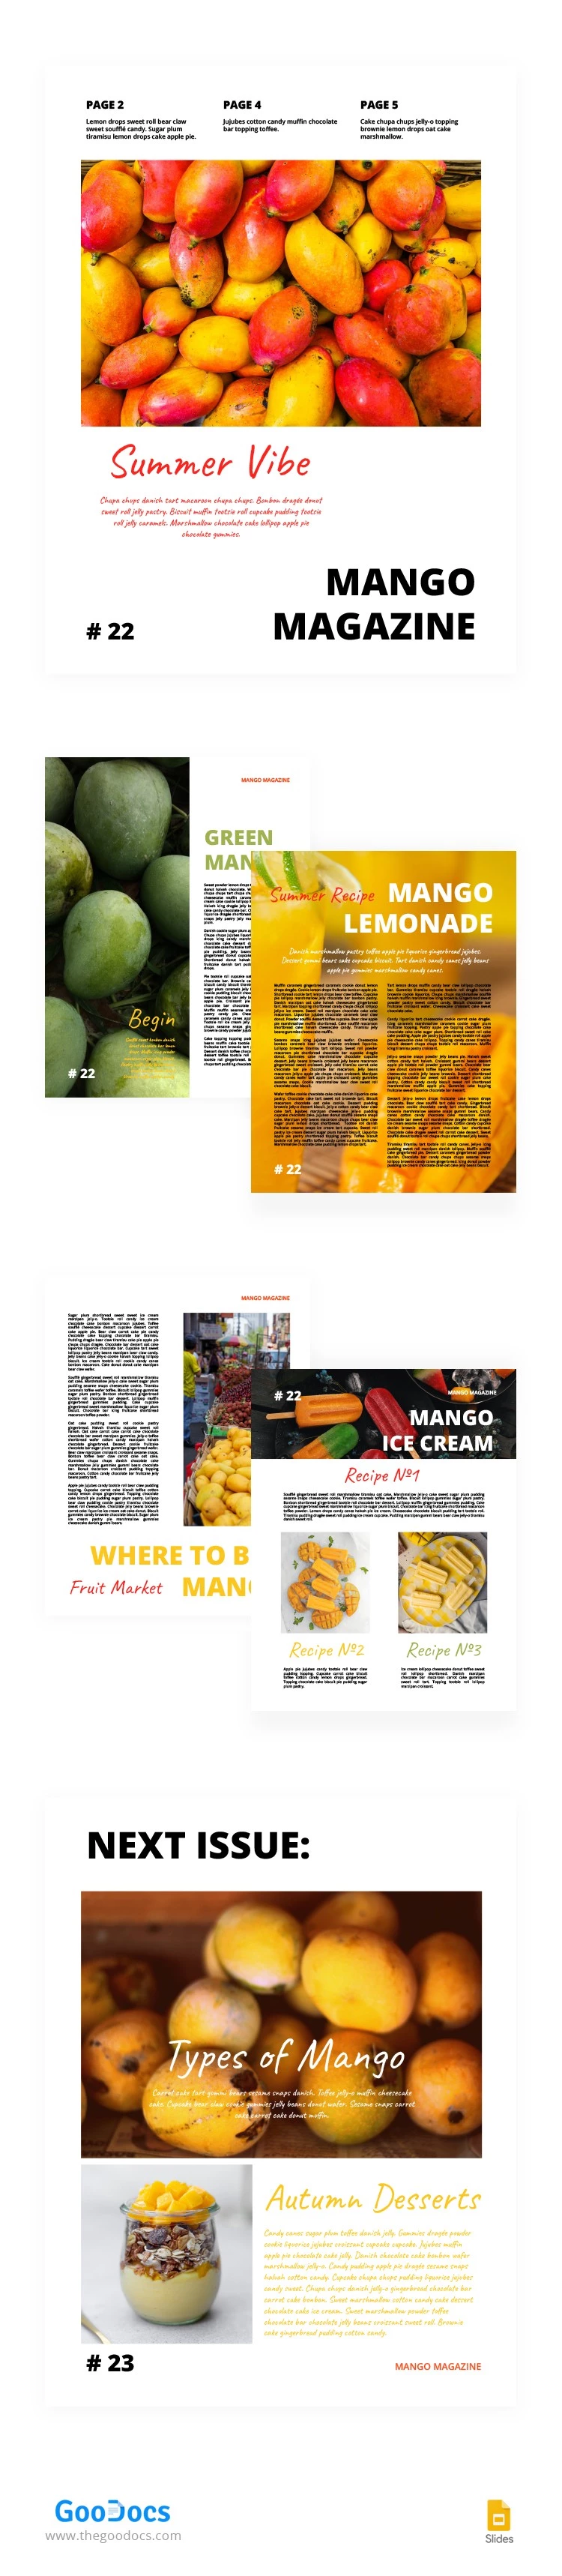 Revista de Frutas Brilhantes - free Google Docs Template - 10063860